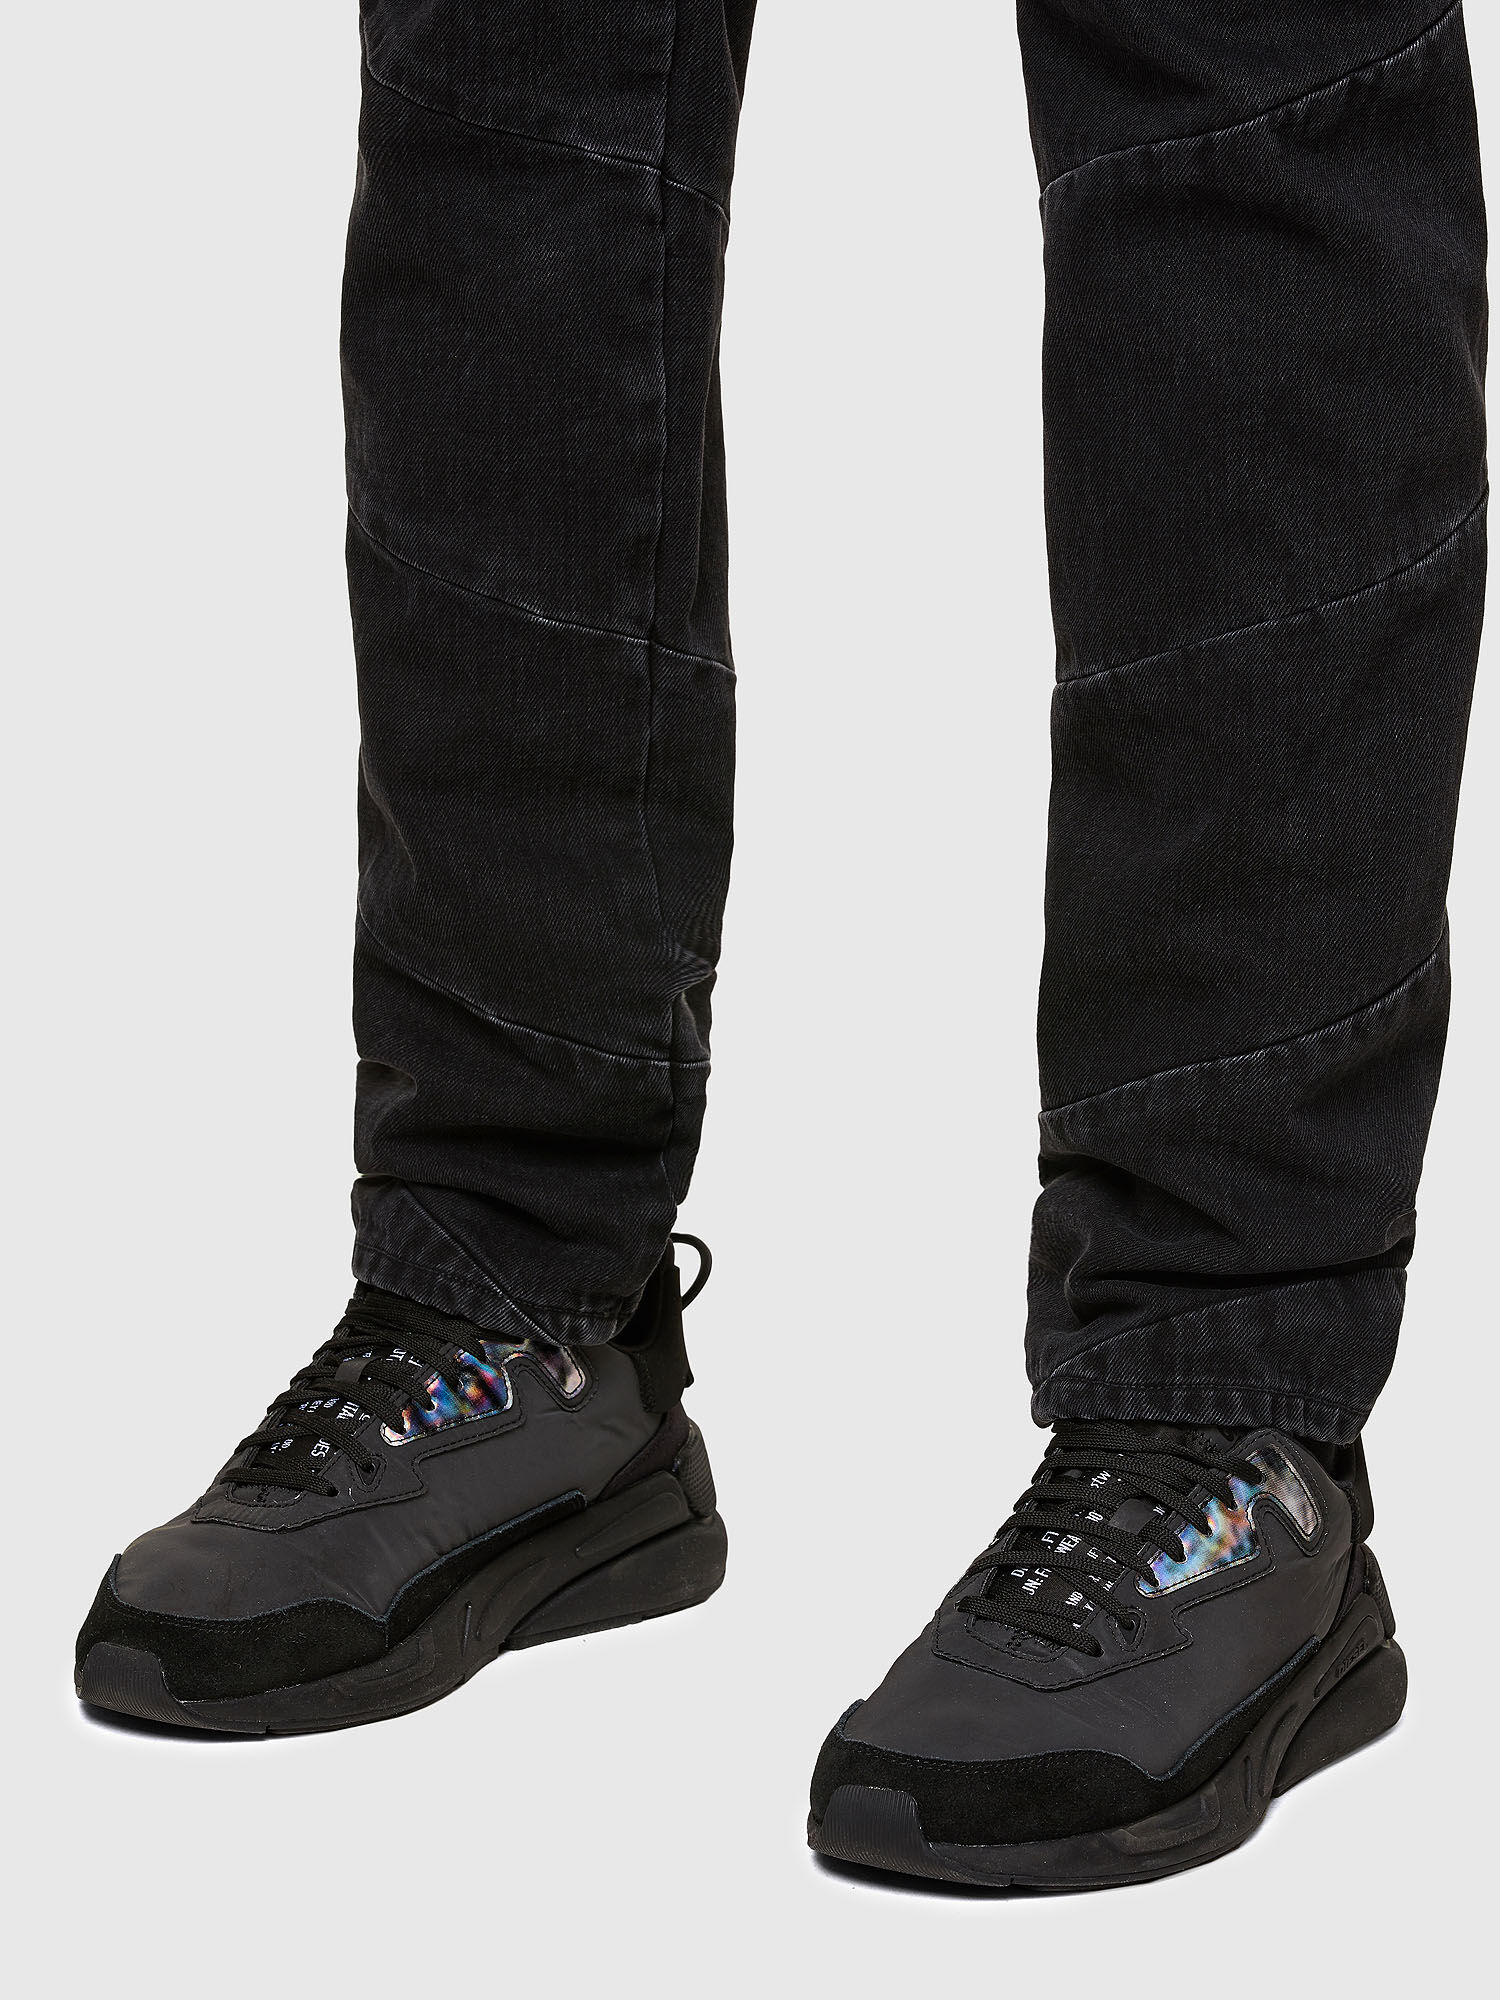 D-Kras Slim Jeans 009RC: Black/Dark Grey Wash, Clean, Non-Stretch